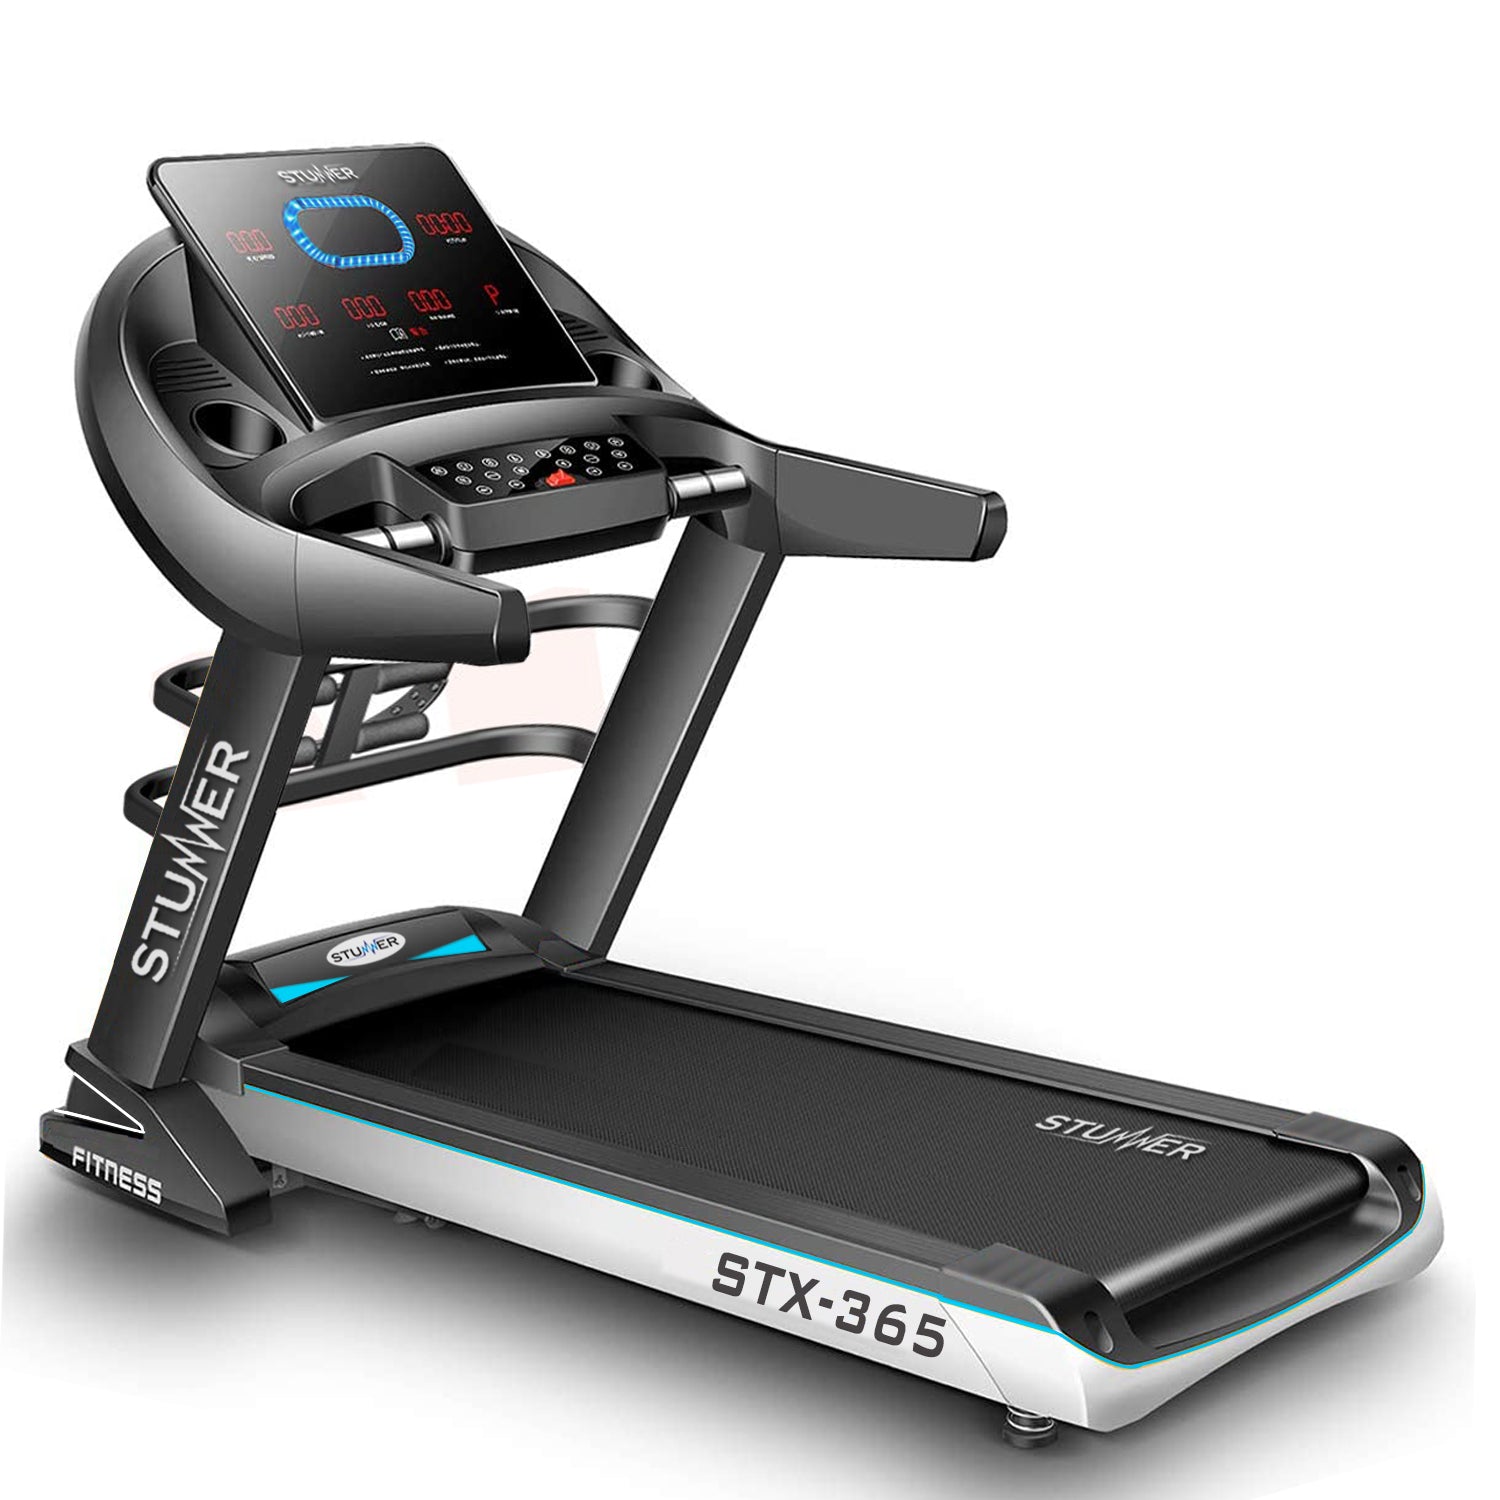 STX-365 Multi Functional Motorized Treadmill